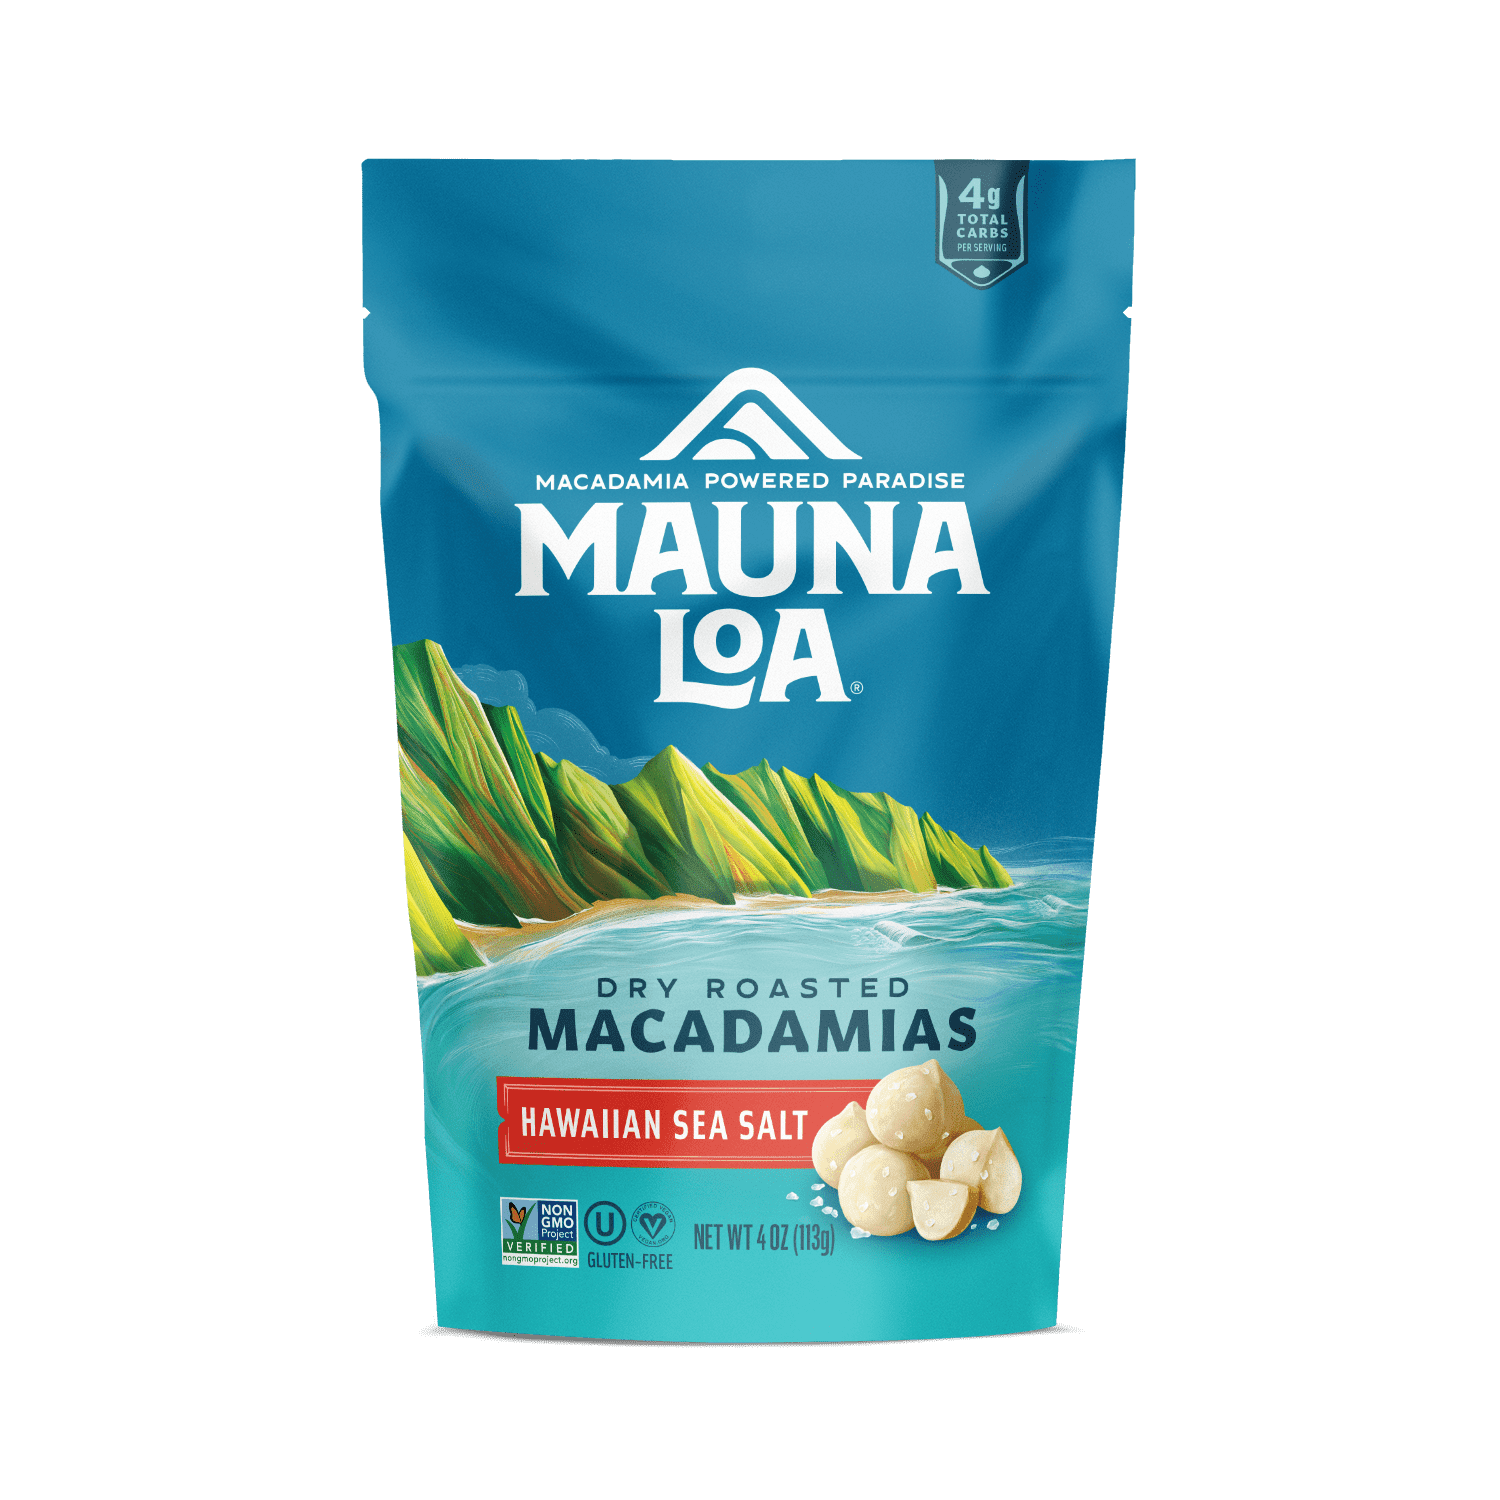 Mauna Loa Hawaiian Sea Salt Macadamias, Gluten-Free, Keto Friendly, 4 oz. Bag